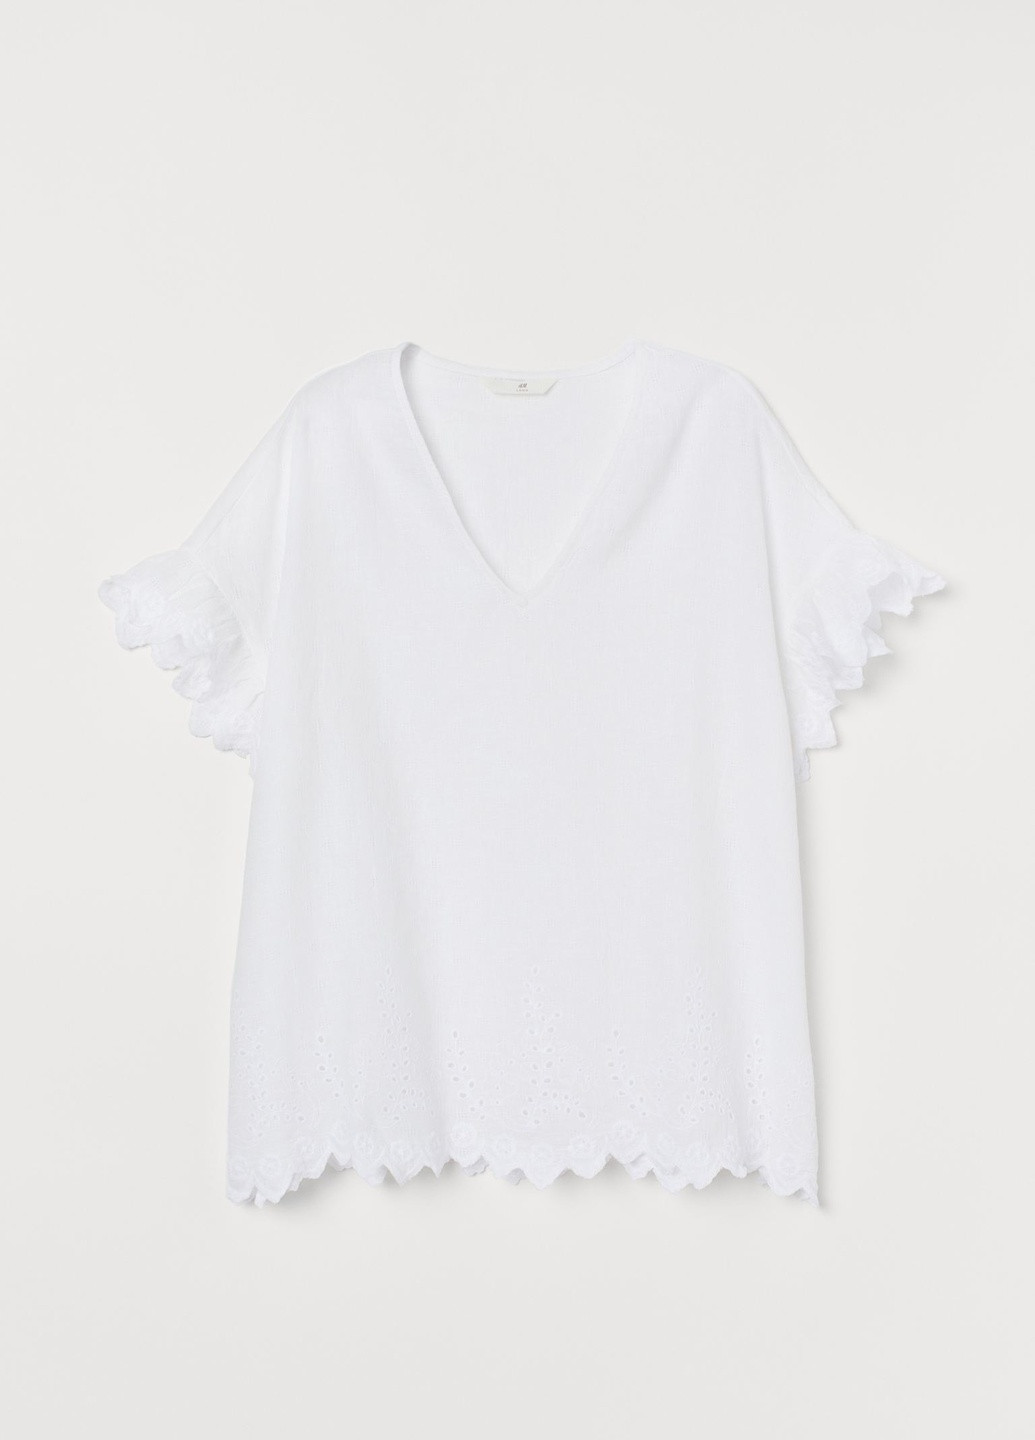 Белая летняя блуза с вышивкой лен бленд H&M женский